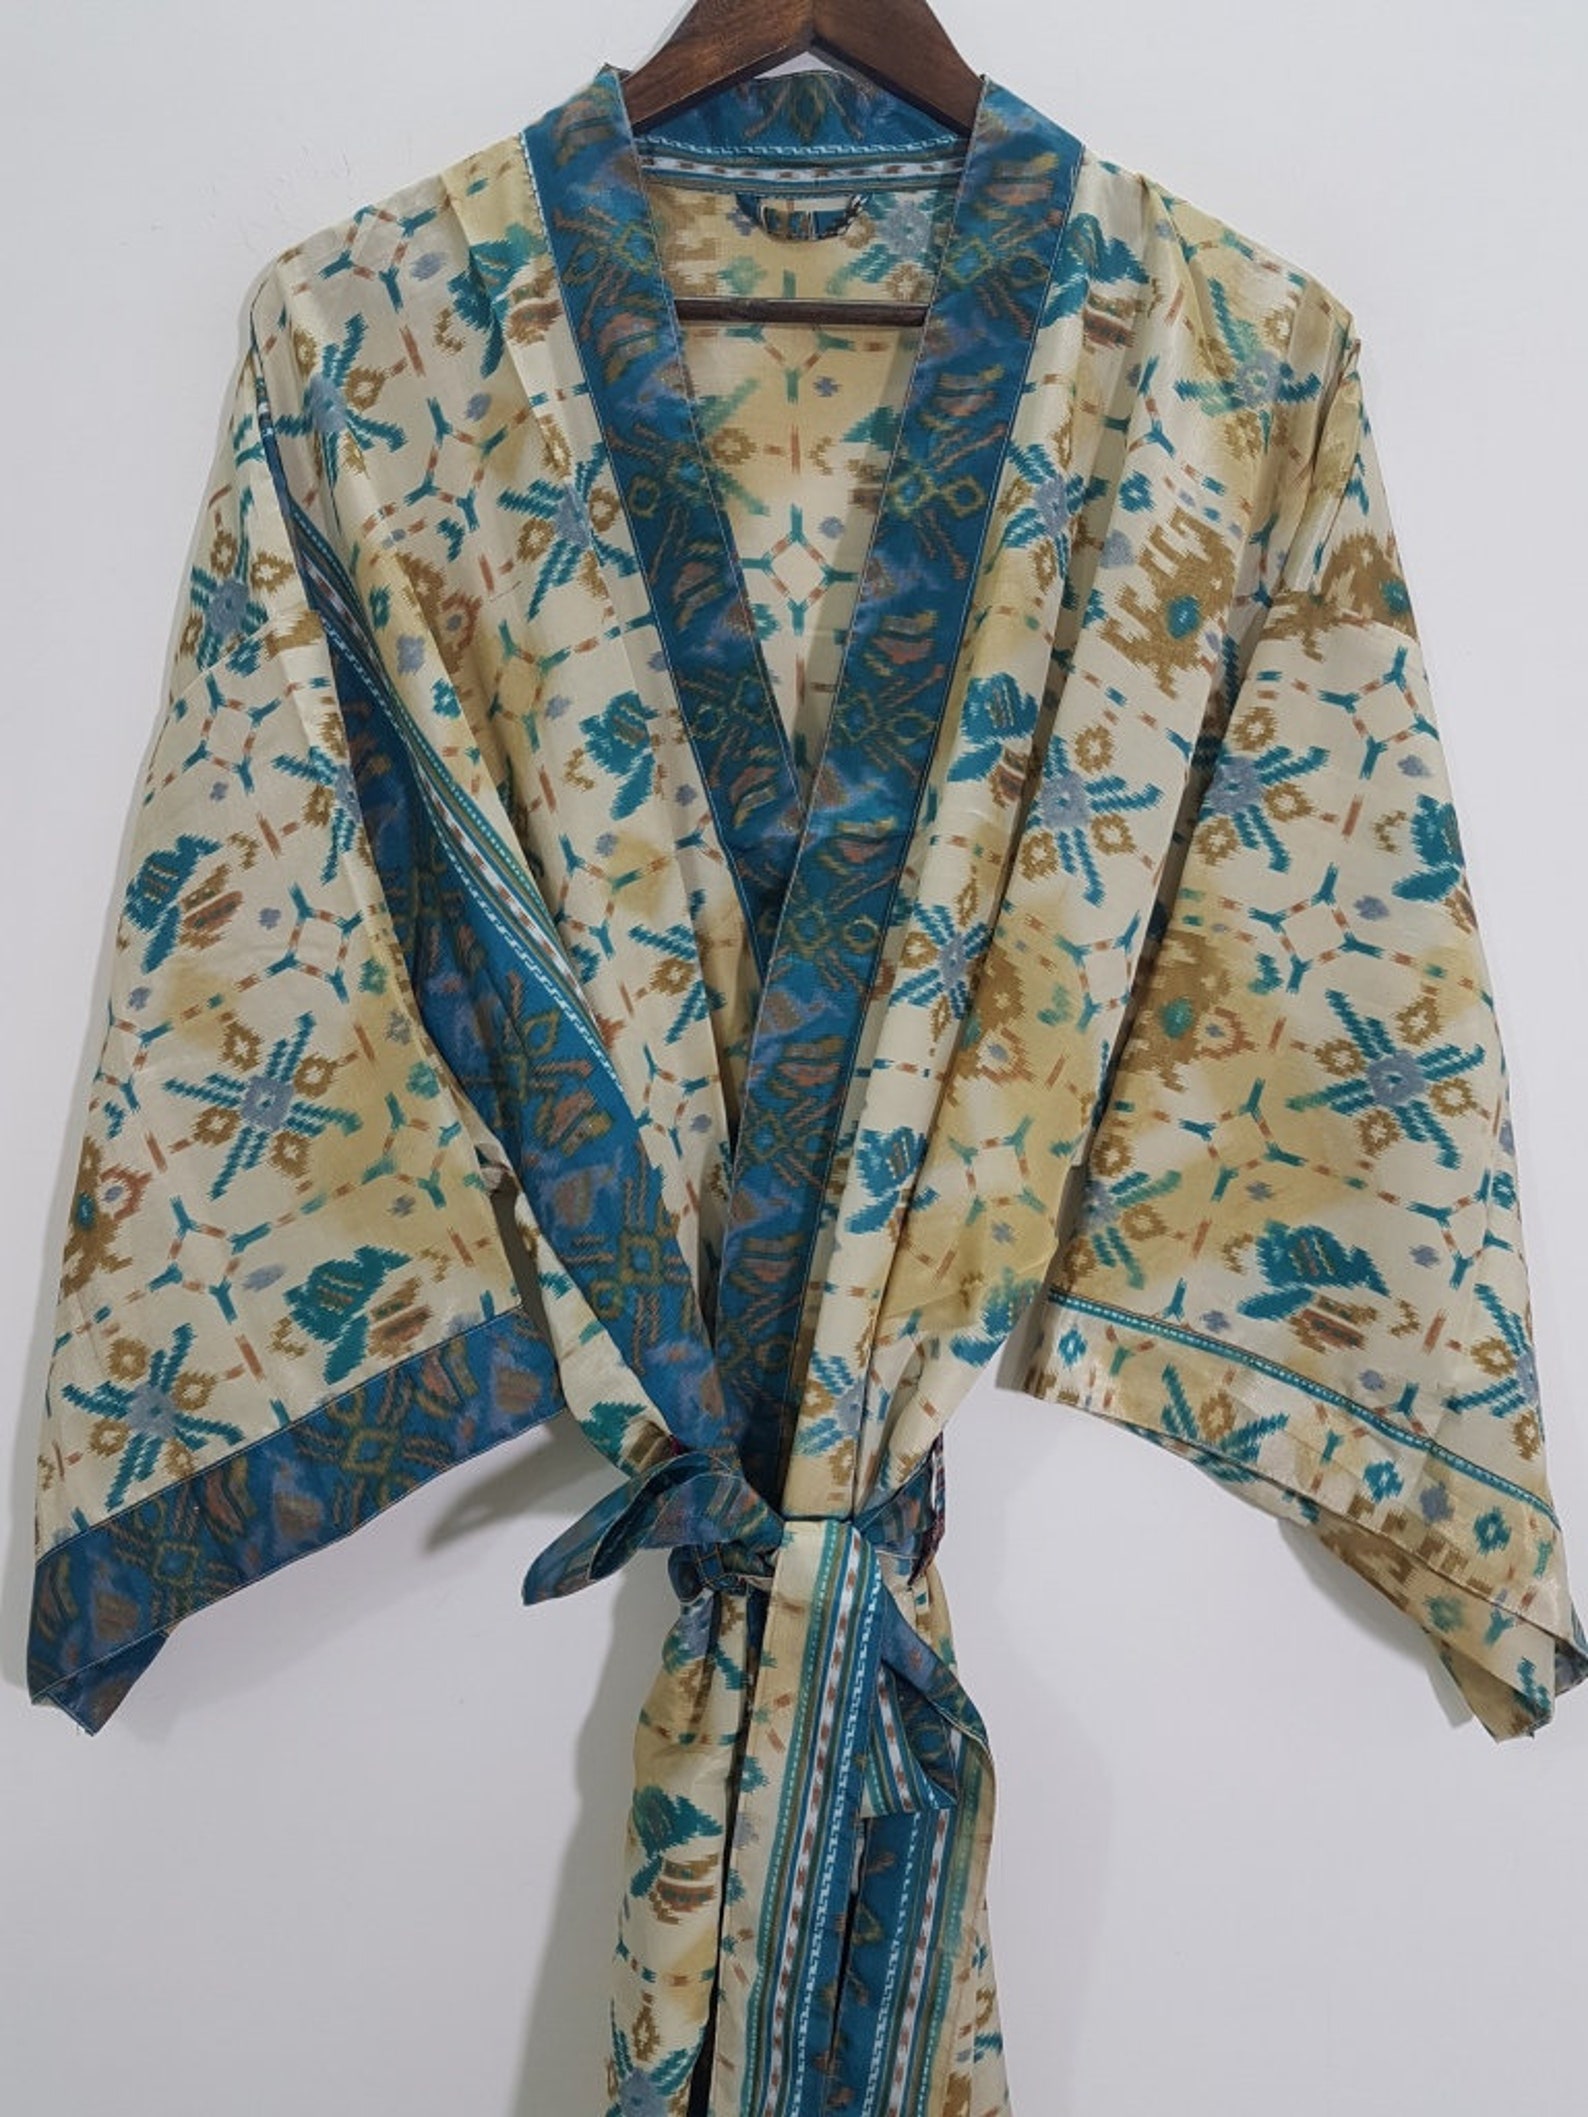 Silk Night Wear kimono Beach Cover Up Robe Home Wear | Etsy